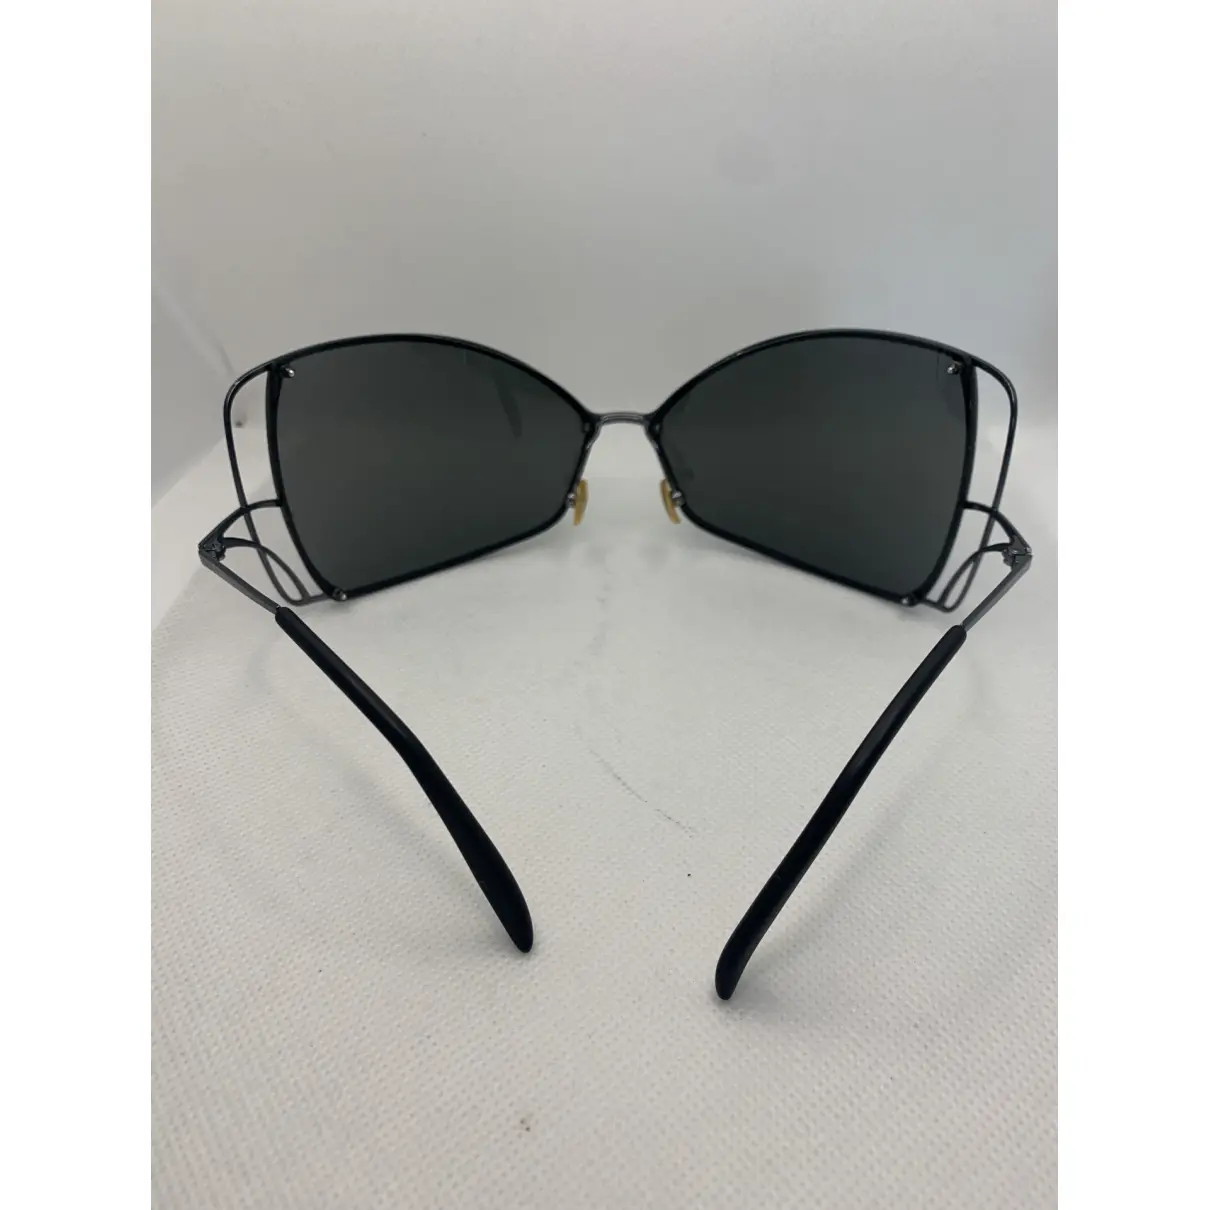 Buy Kenzo Sunglasses online